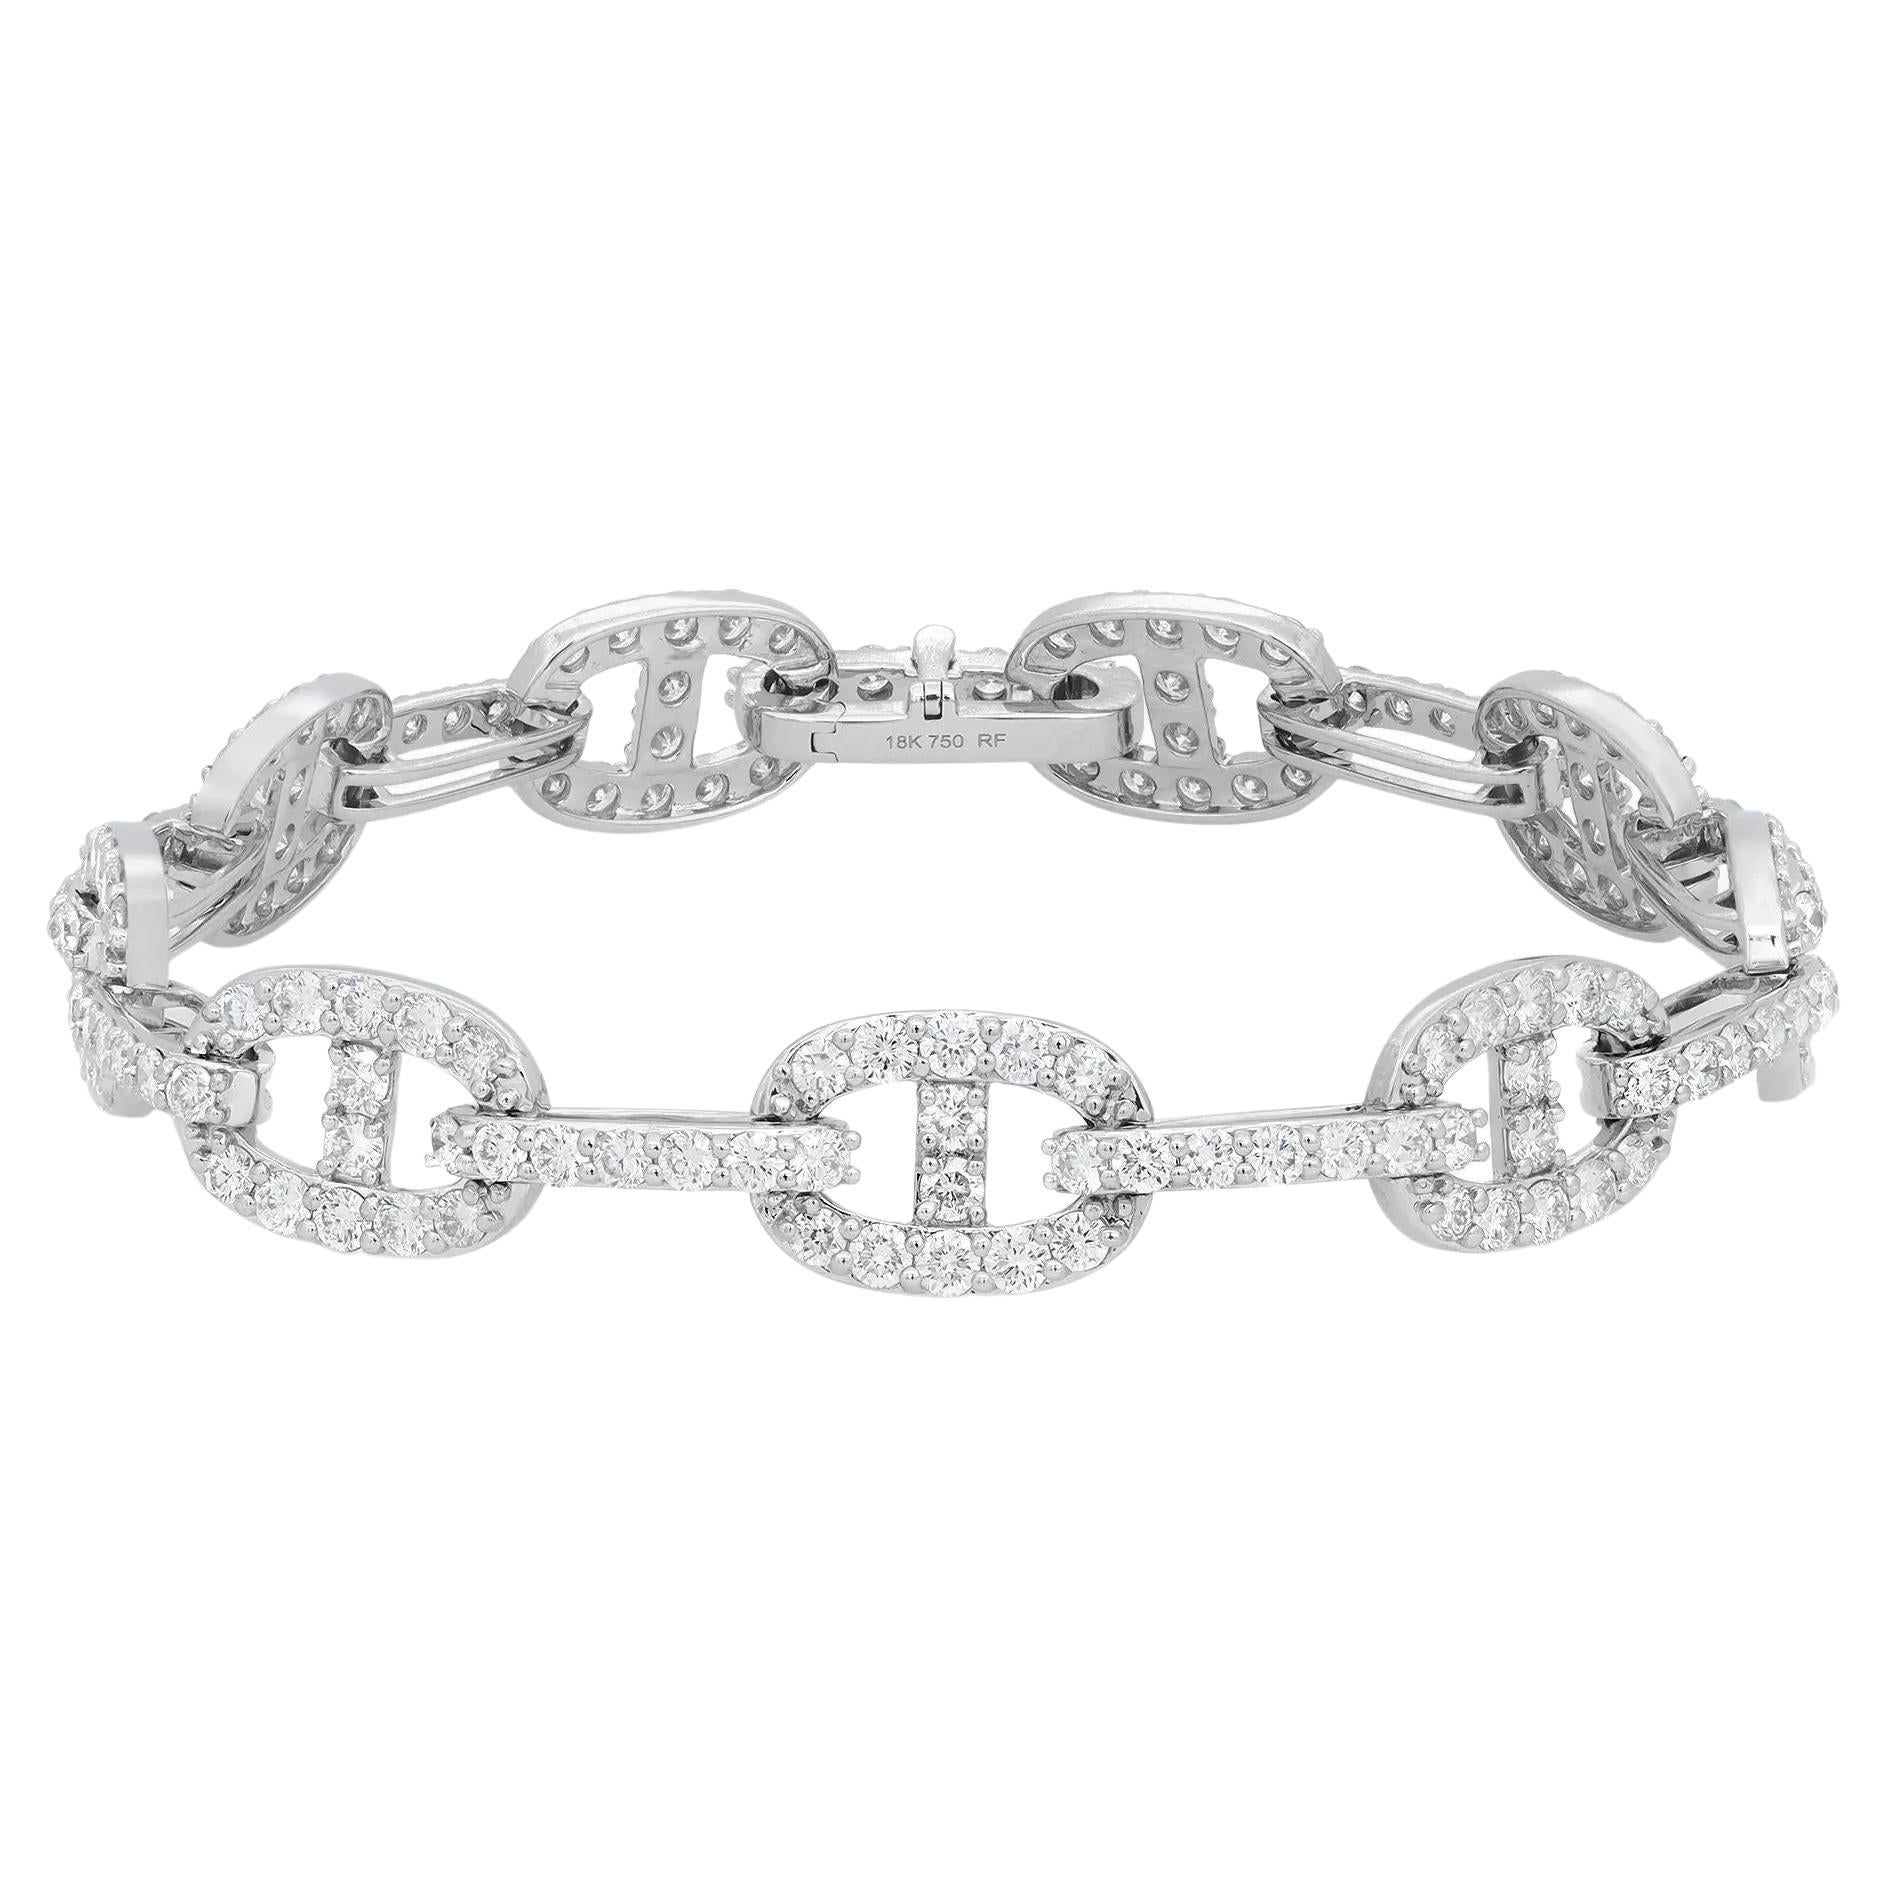 Rachel Koen 5.00 Cttw Round Cut Diamond Link Bracelet 18K White Gold For Sale